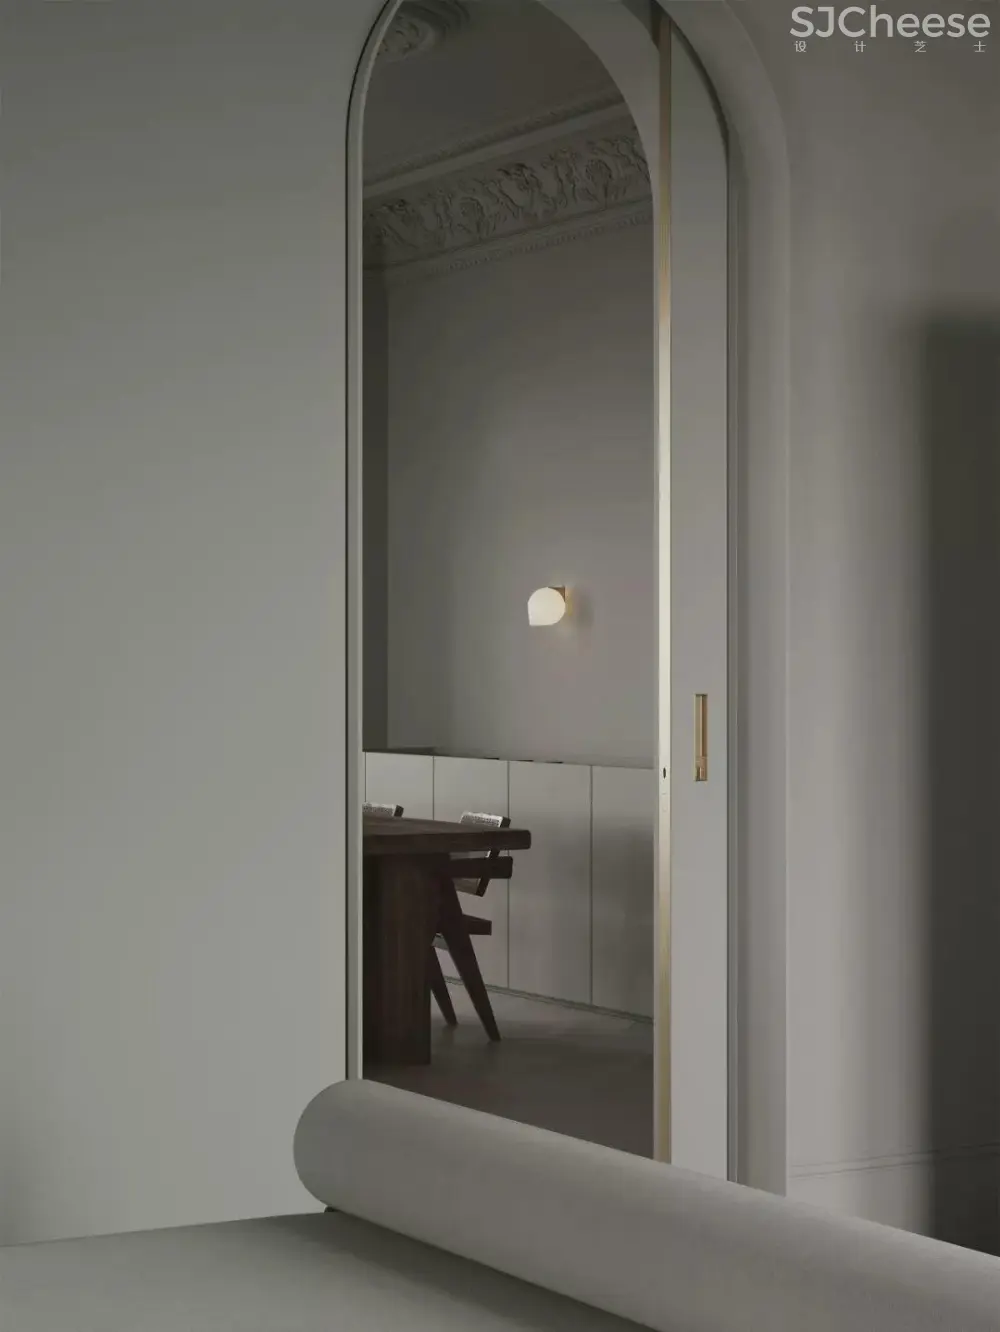 Emil Dervish 极简现代 - 实景作品集丨高清摄影16套2267张图丨824M